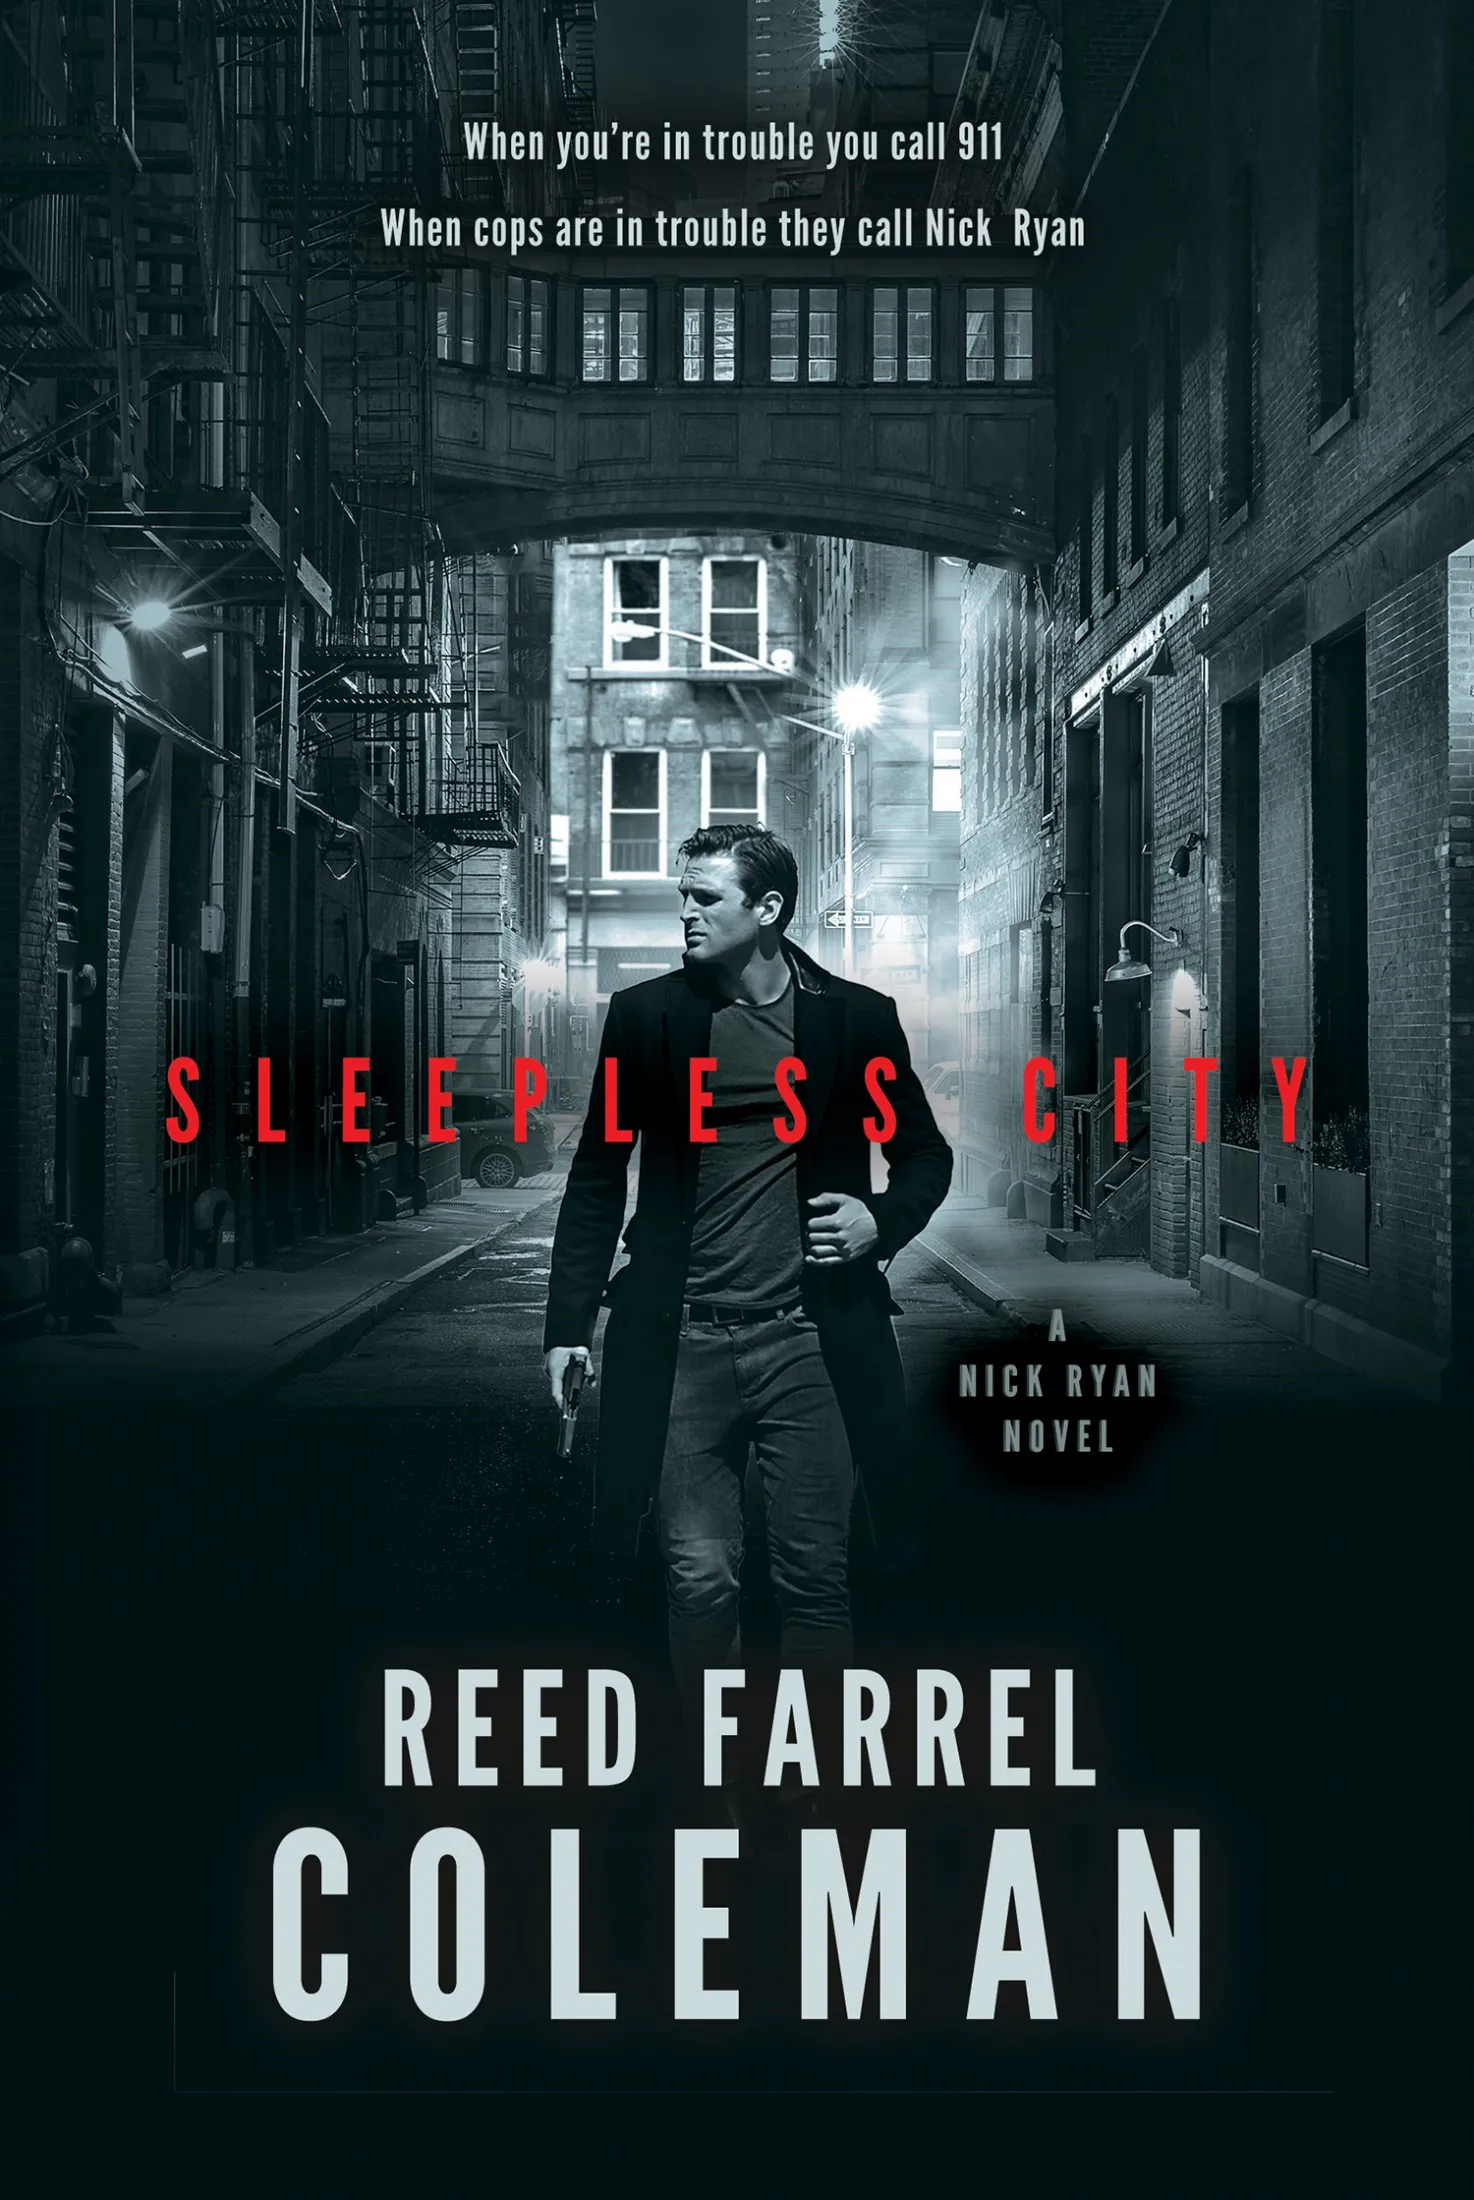 Sleepless City (Nick Ryan #1)